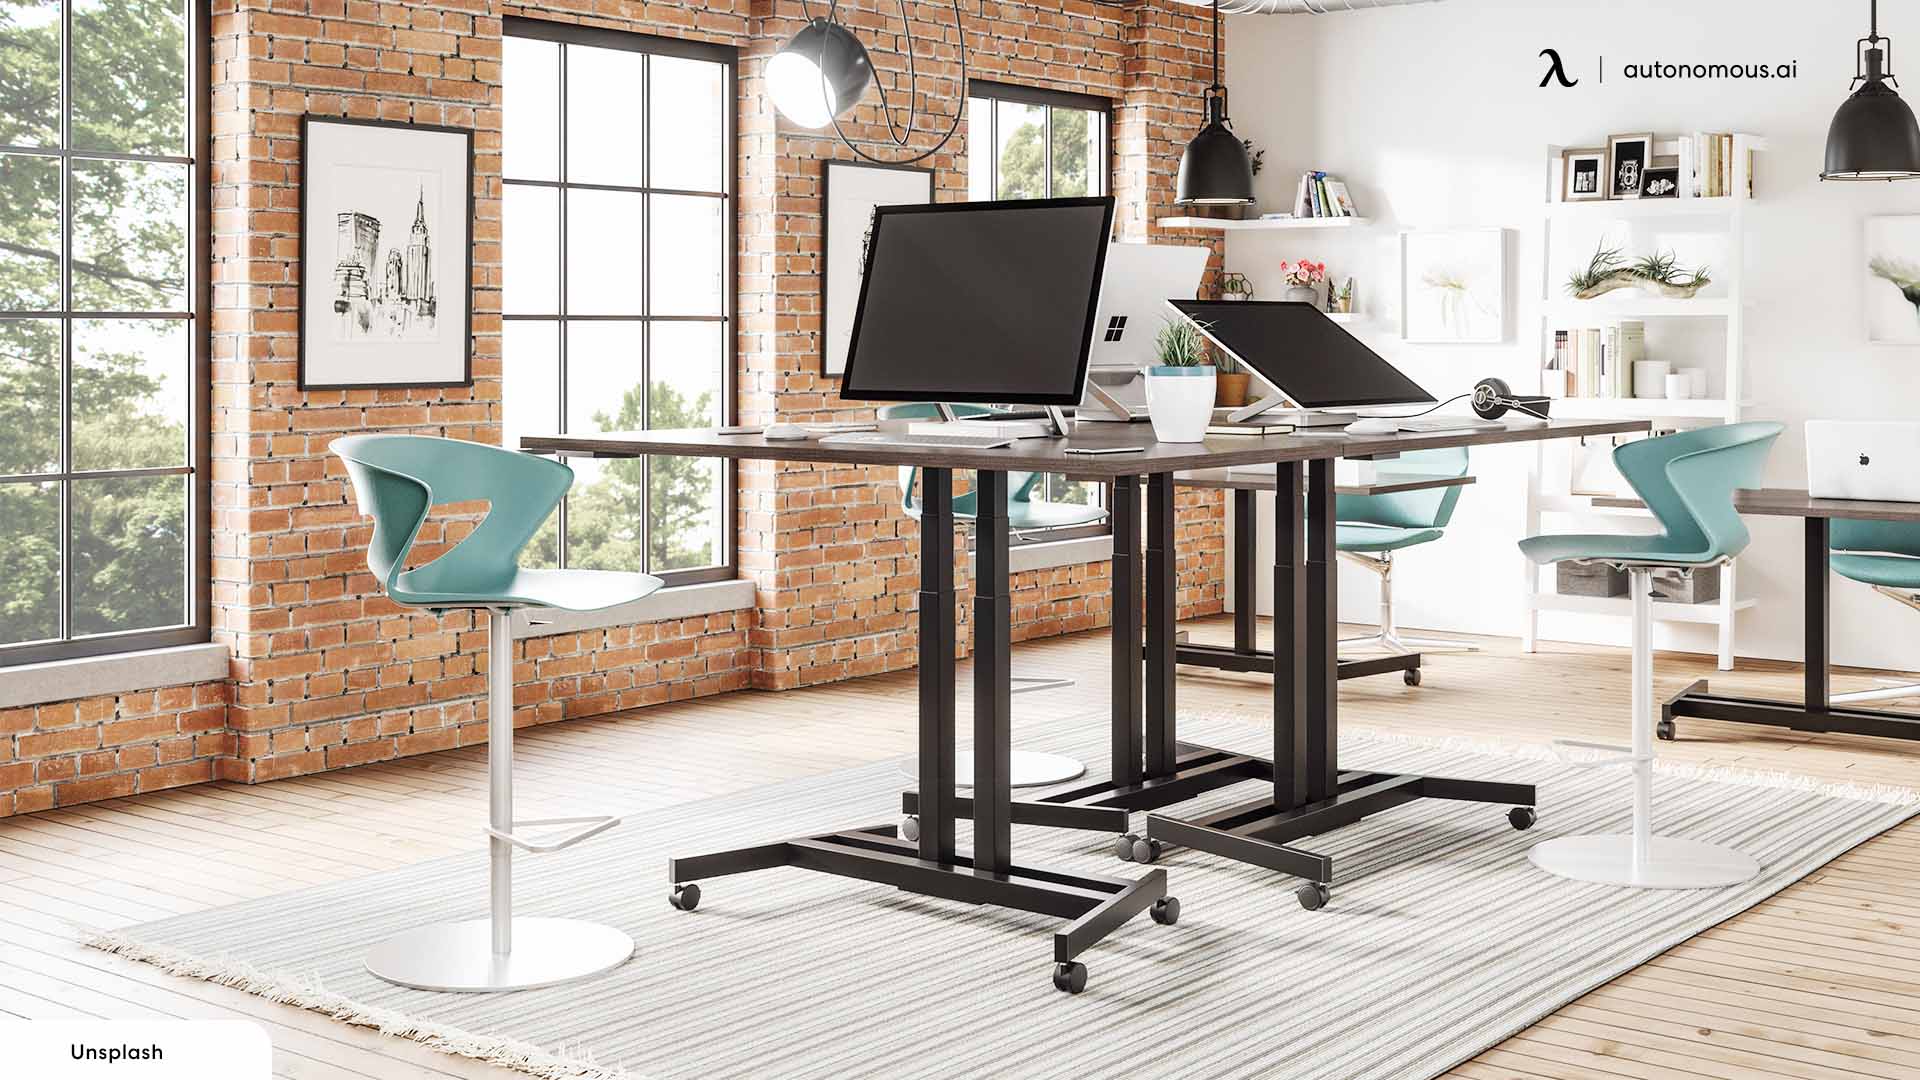 How to Arrange 2 Desks in an Office - Best Design Tips